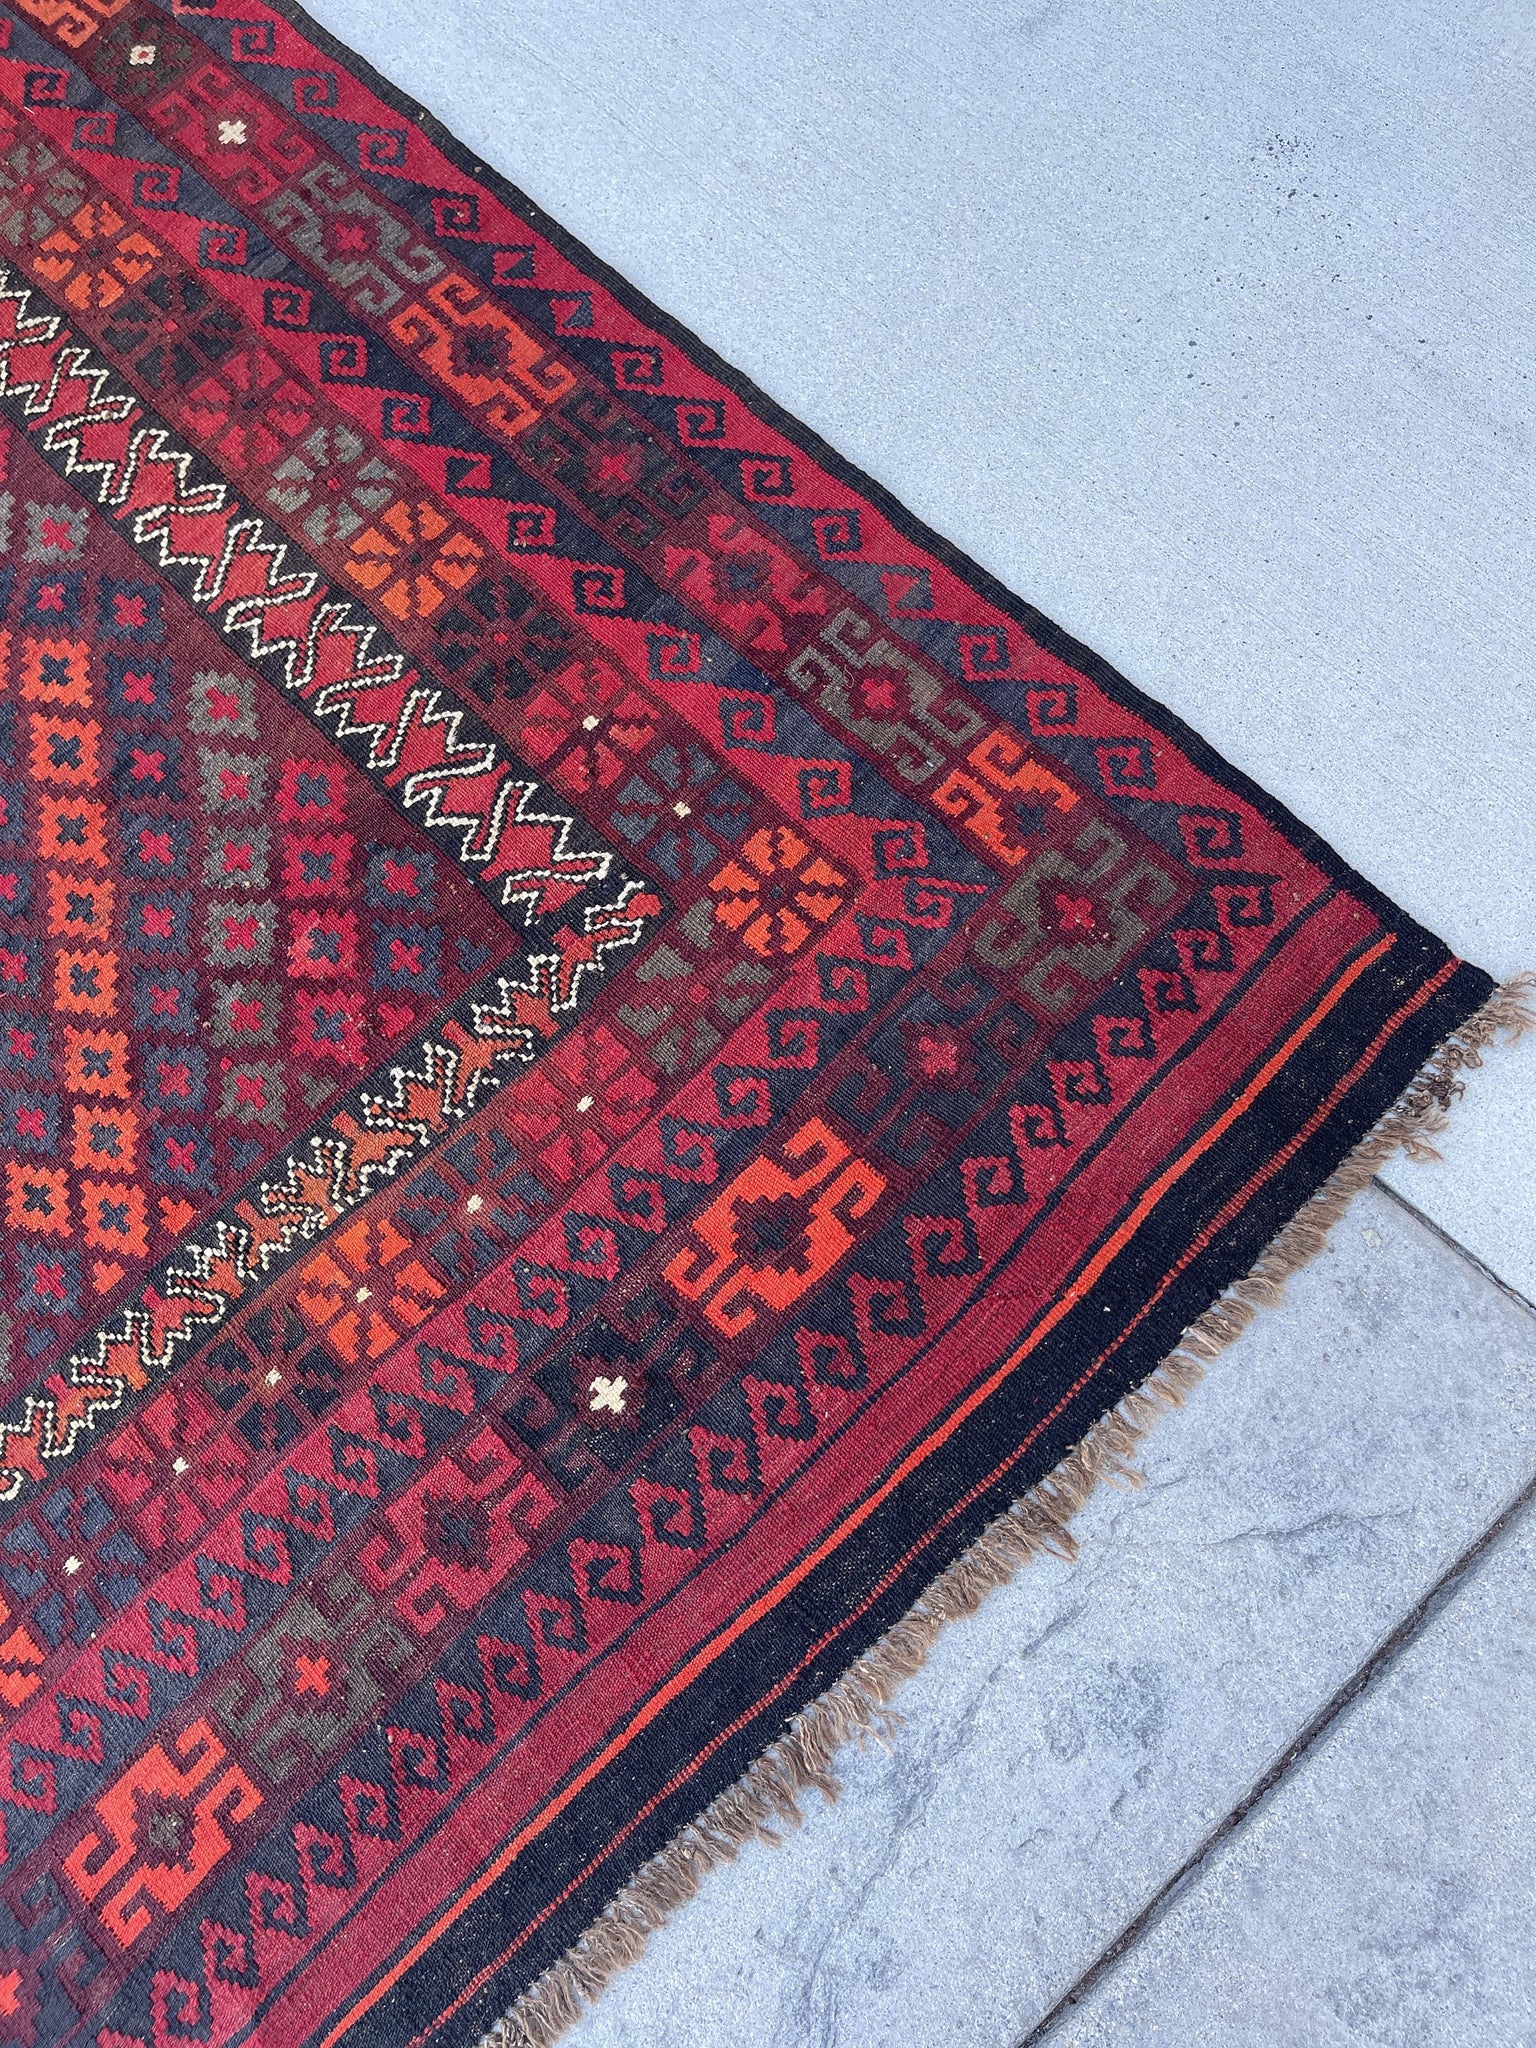 5x9 (160x274) Vintage Kilim Flatweave Afghan Rug | Red White Light Blue Black Green Orange| Bohemian Outdoor Tribal Turkish Moroccan